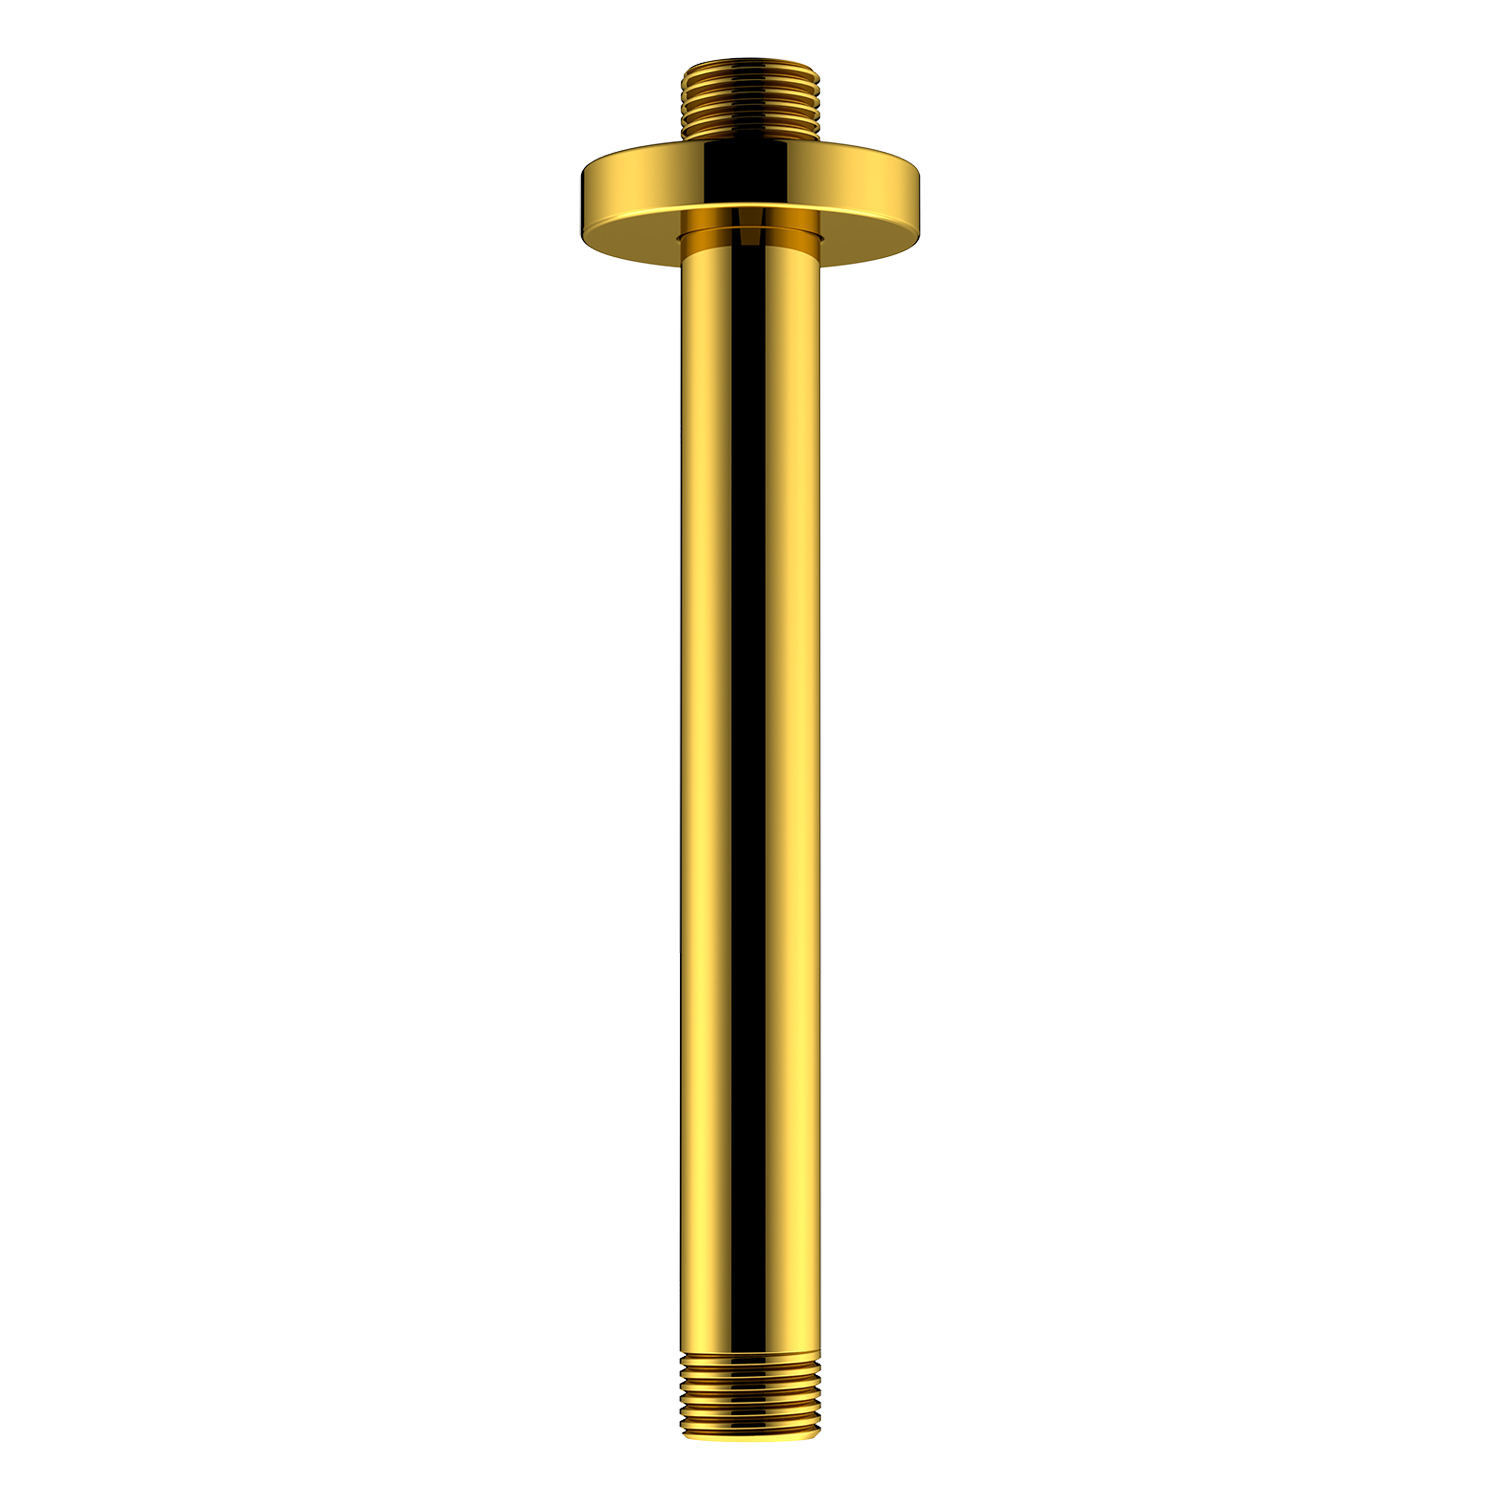 Излив WasserKRAFT Sauer 7100 (A234) 9063506 wasserkraft кронштейн для верхнего душа wasserkraft sauer 7100 a234 золото